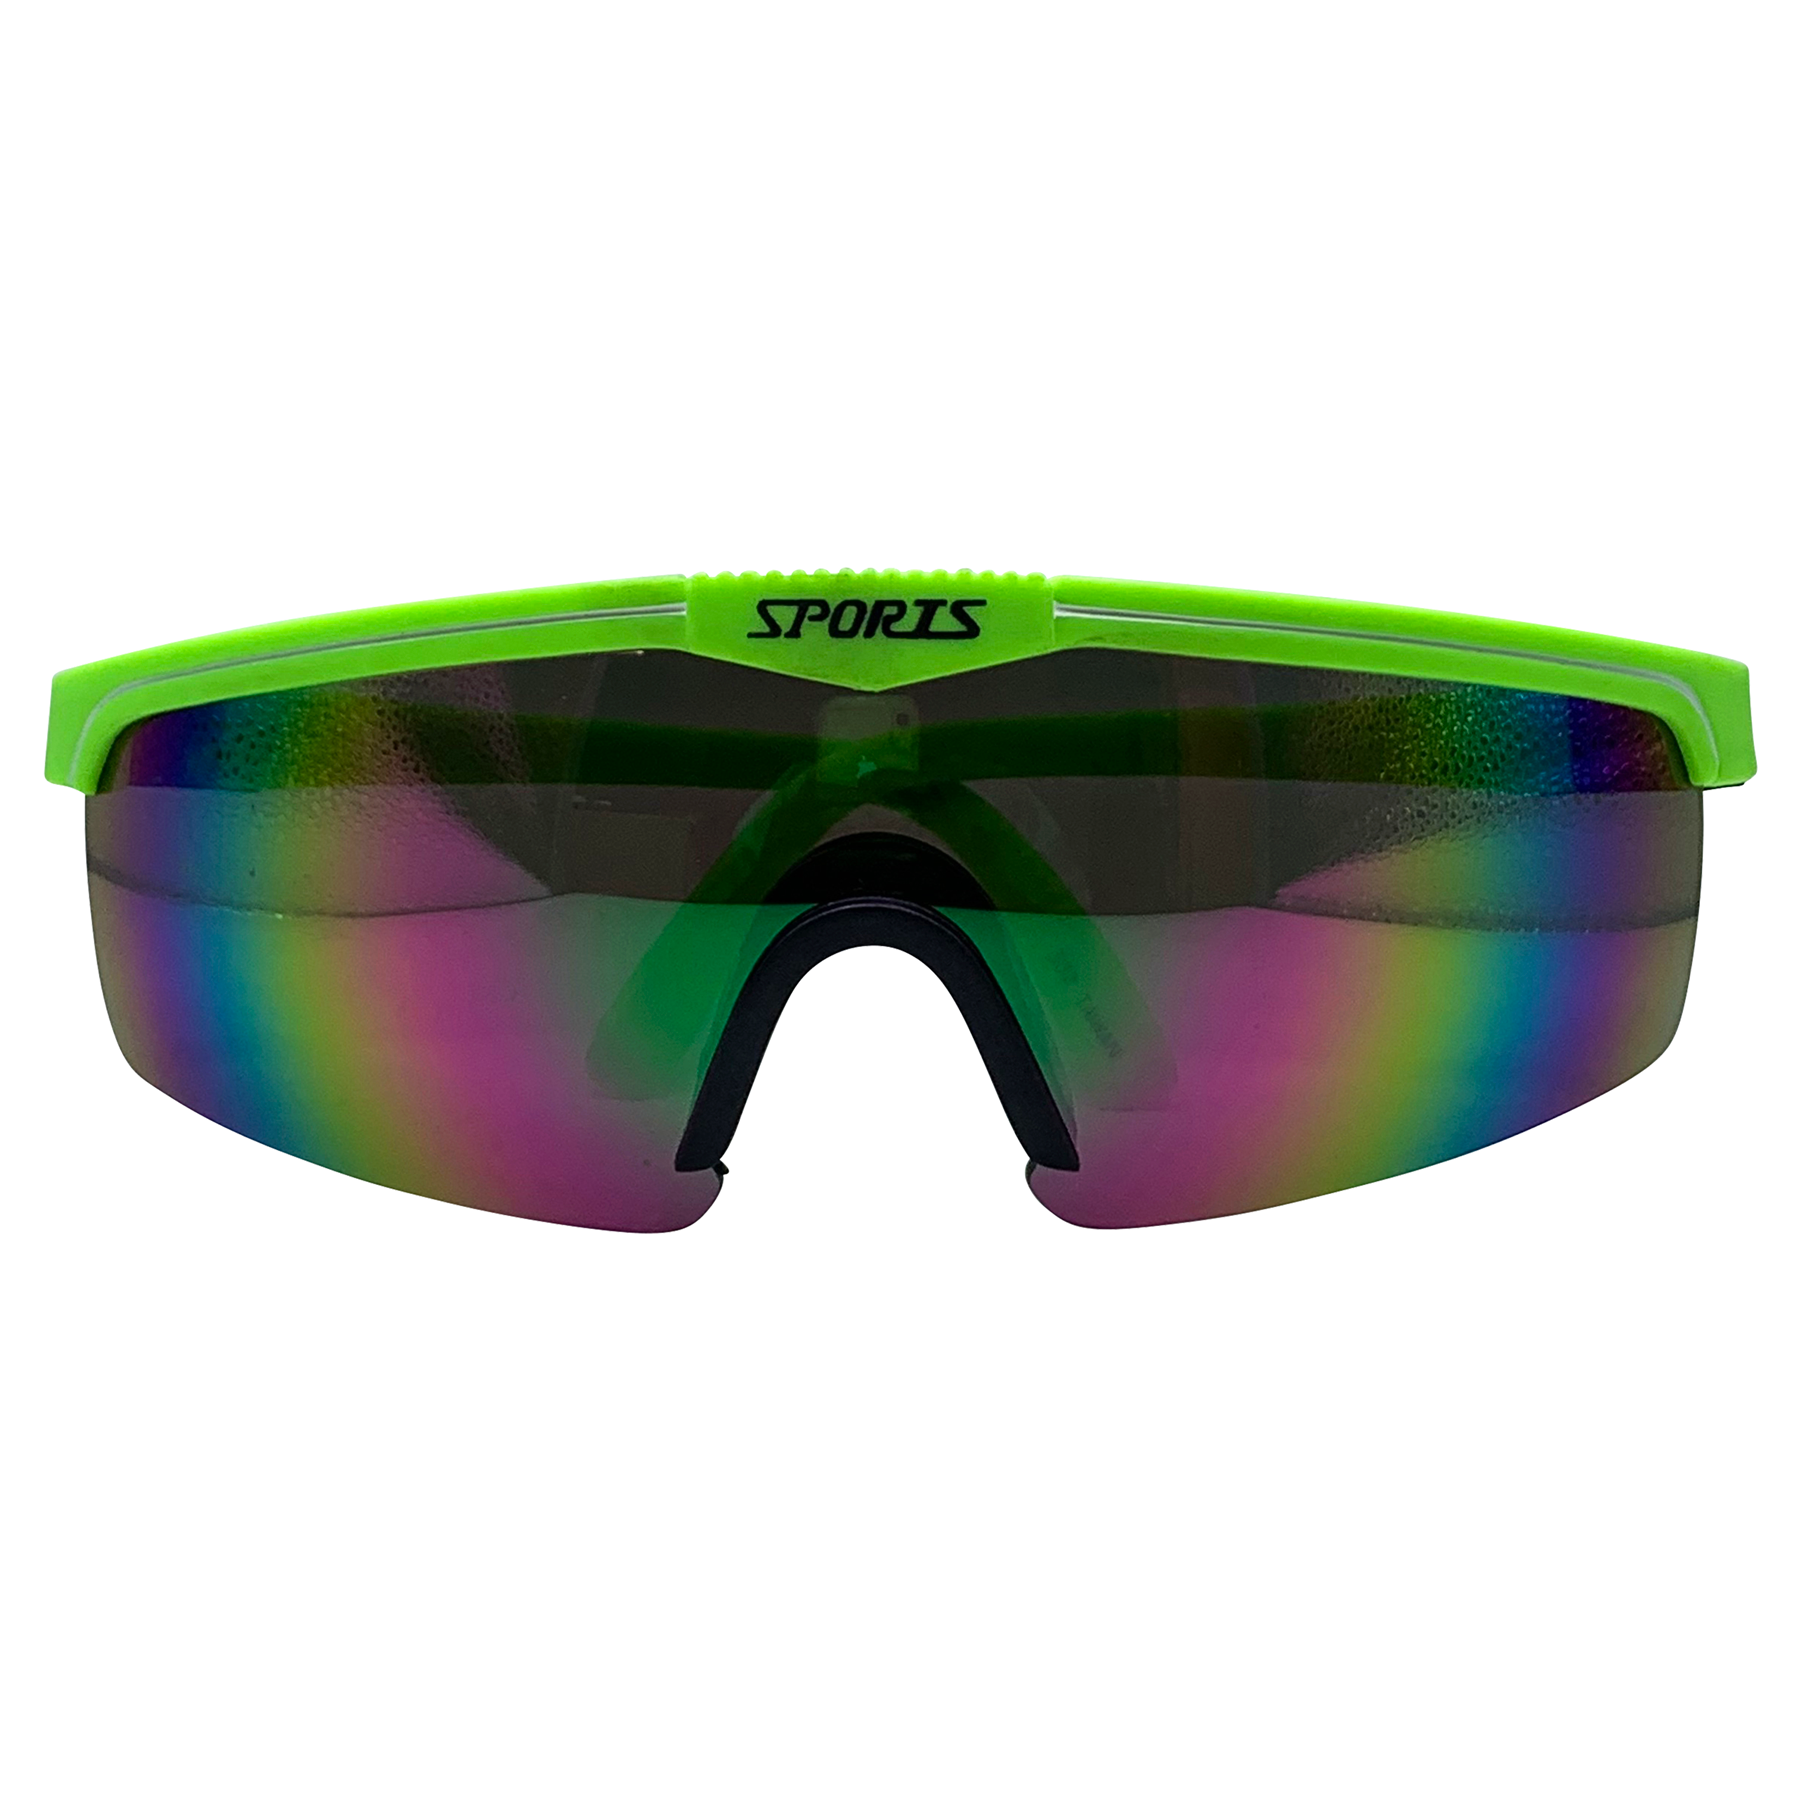 JENNER Green Neon Wraparound Shield Sunglasses